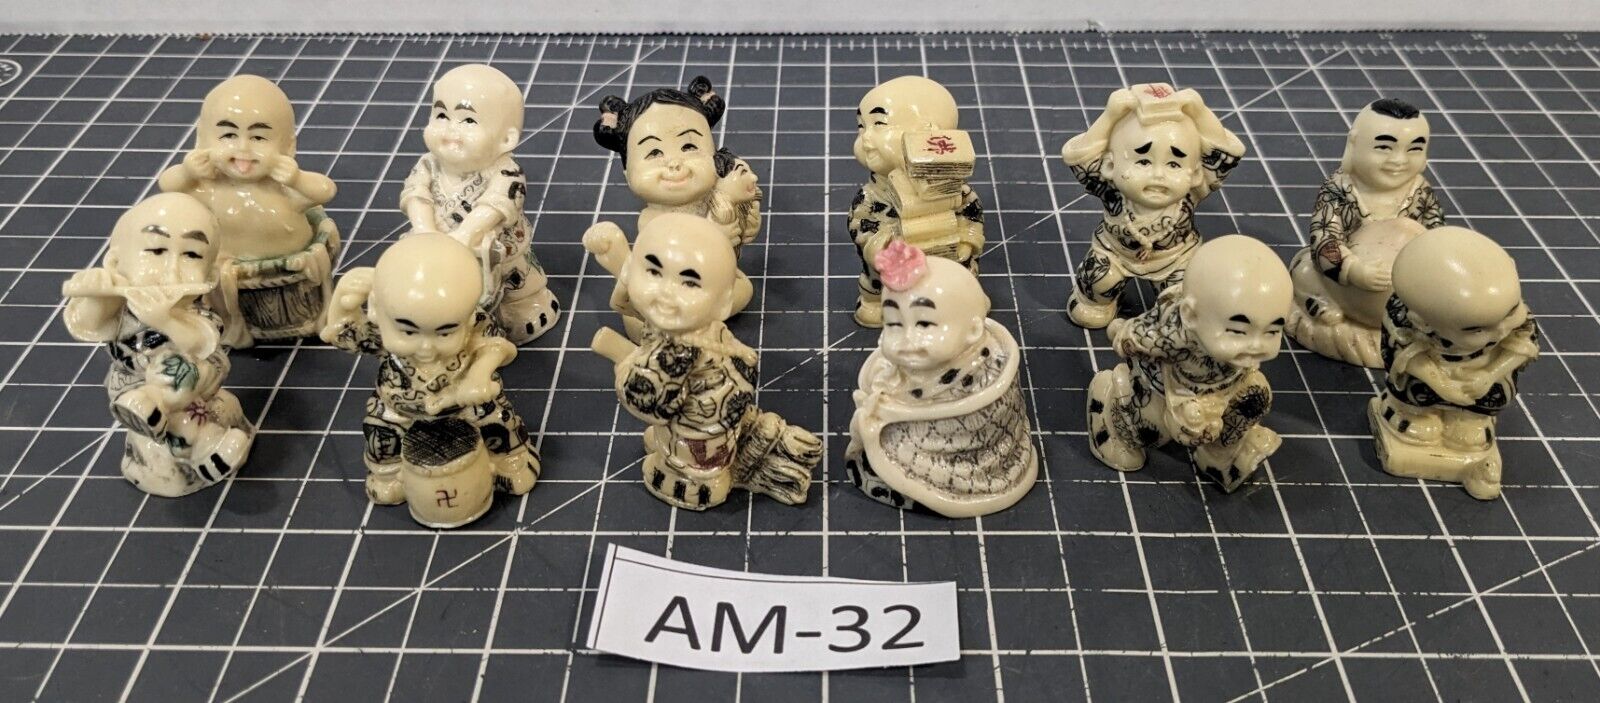 ** (12) Chinese Resin Figurines (Kids Posing) AM-32